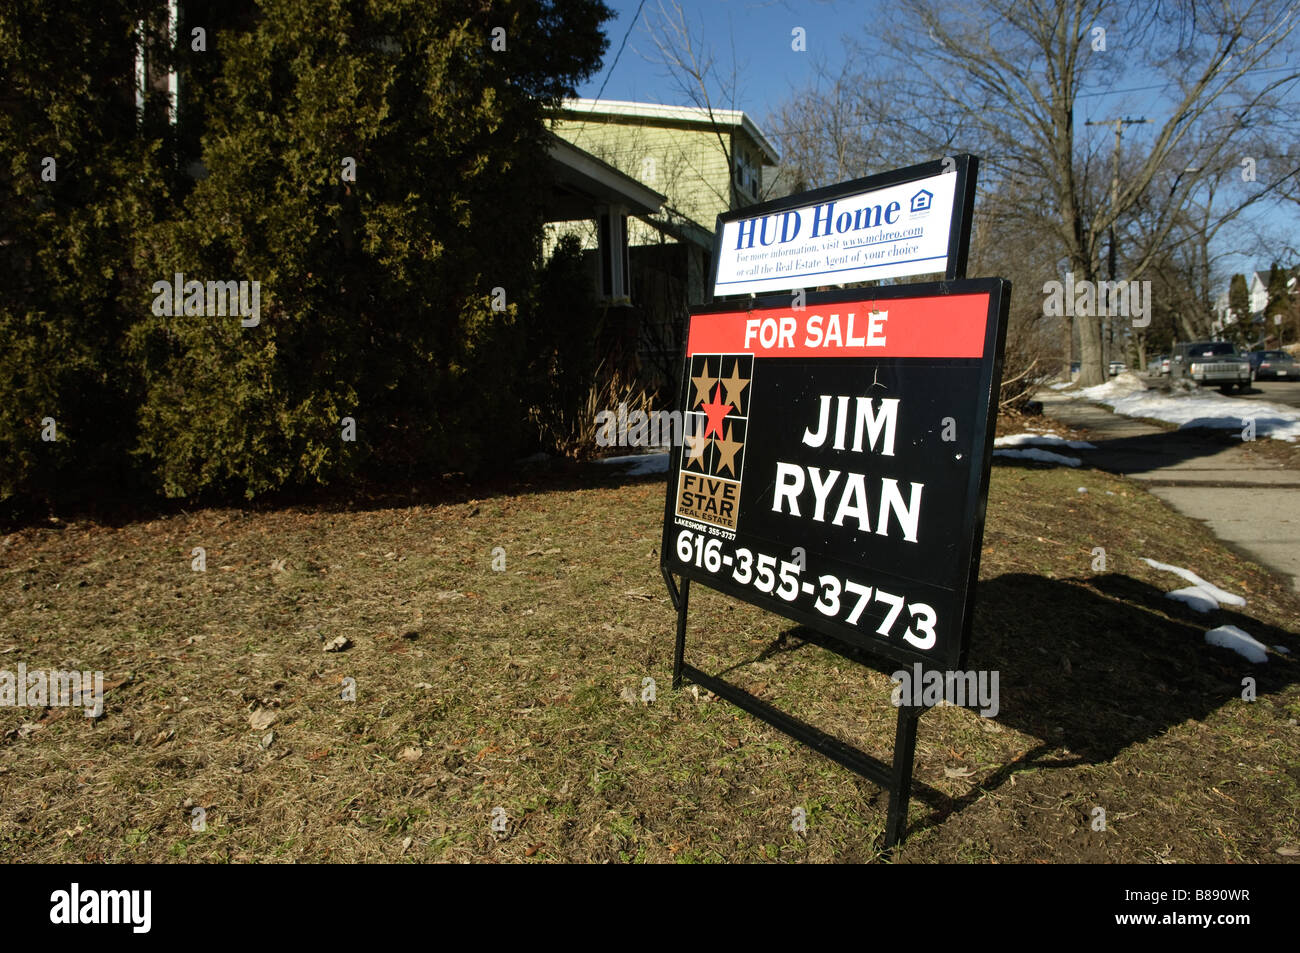 Segno pubblicità un HUD home in vendita in Grand Rapids Michigan STATI UNITI Foto Stock